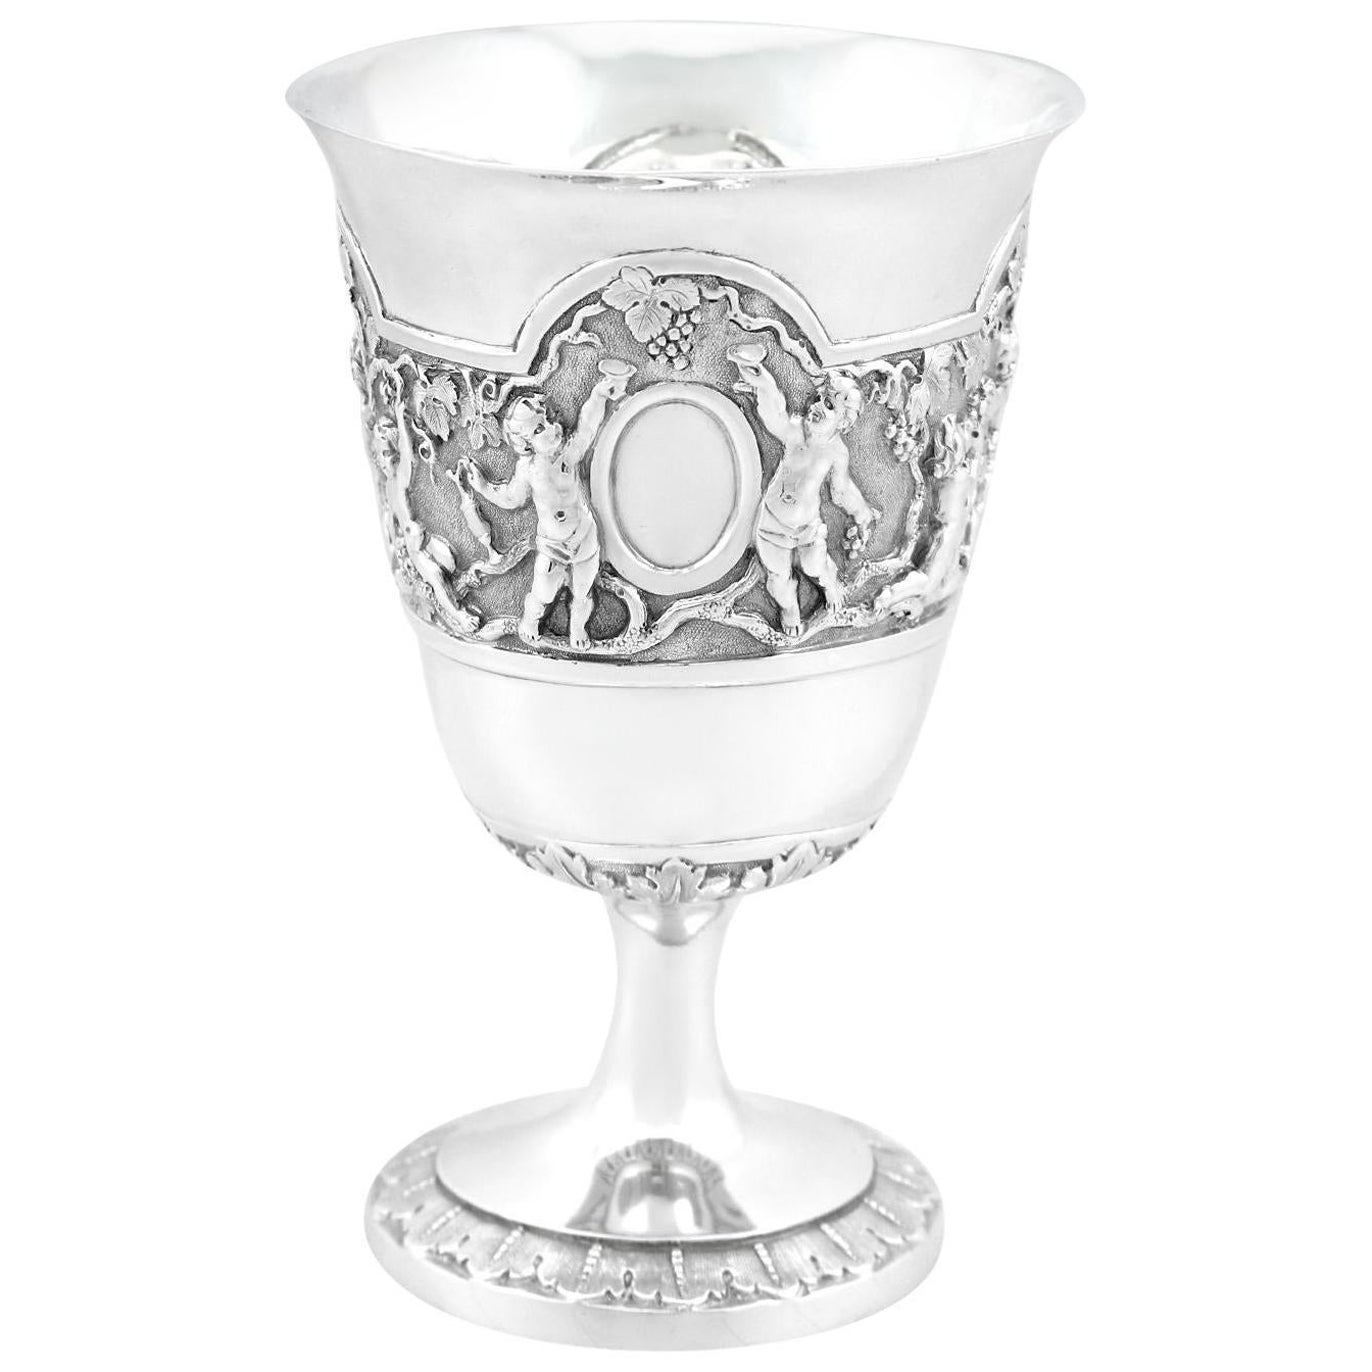 Chawner & Co Antique Victorian Sterling Silver Goblet